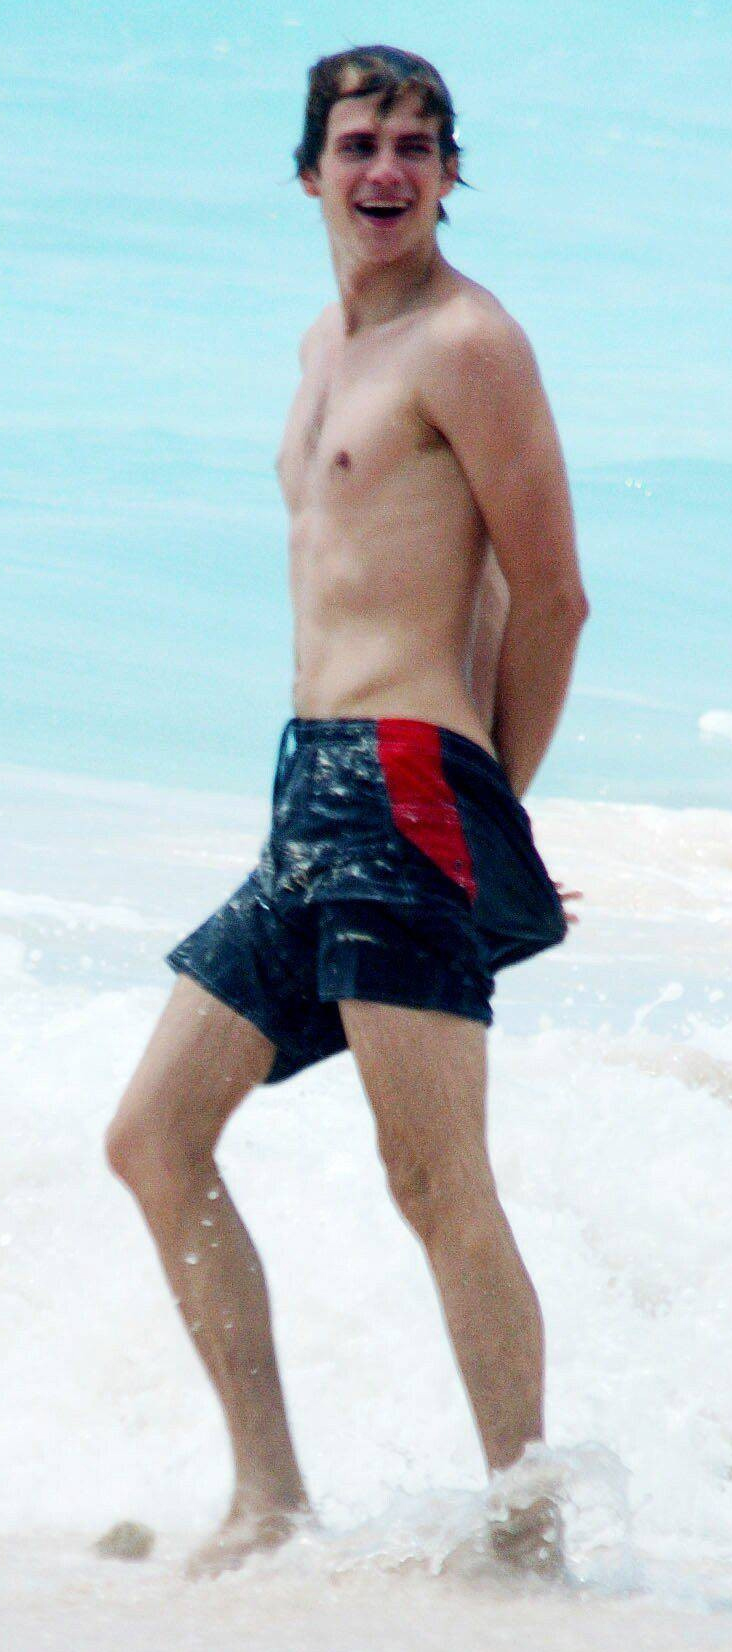 Real Hayden Christensen Naked.